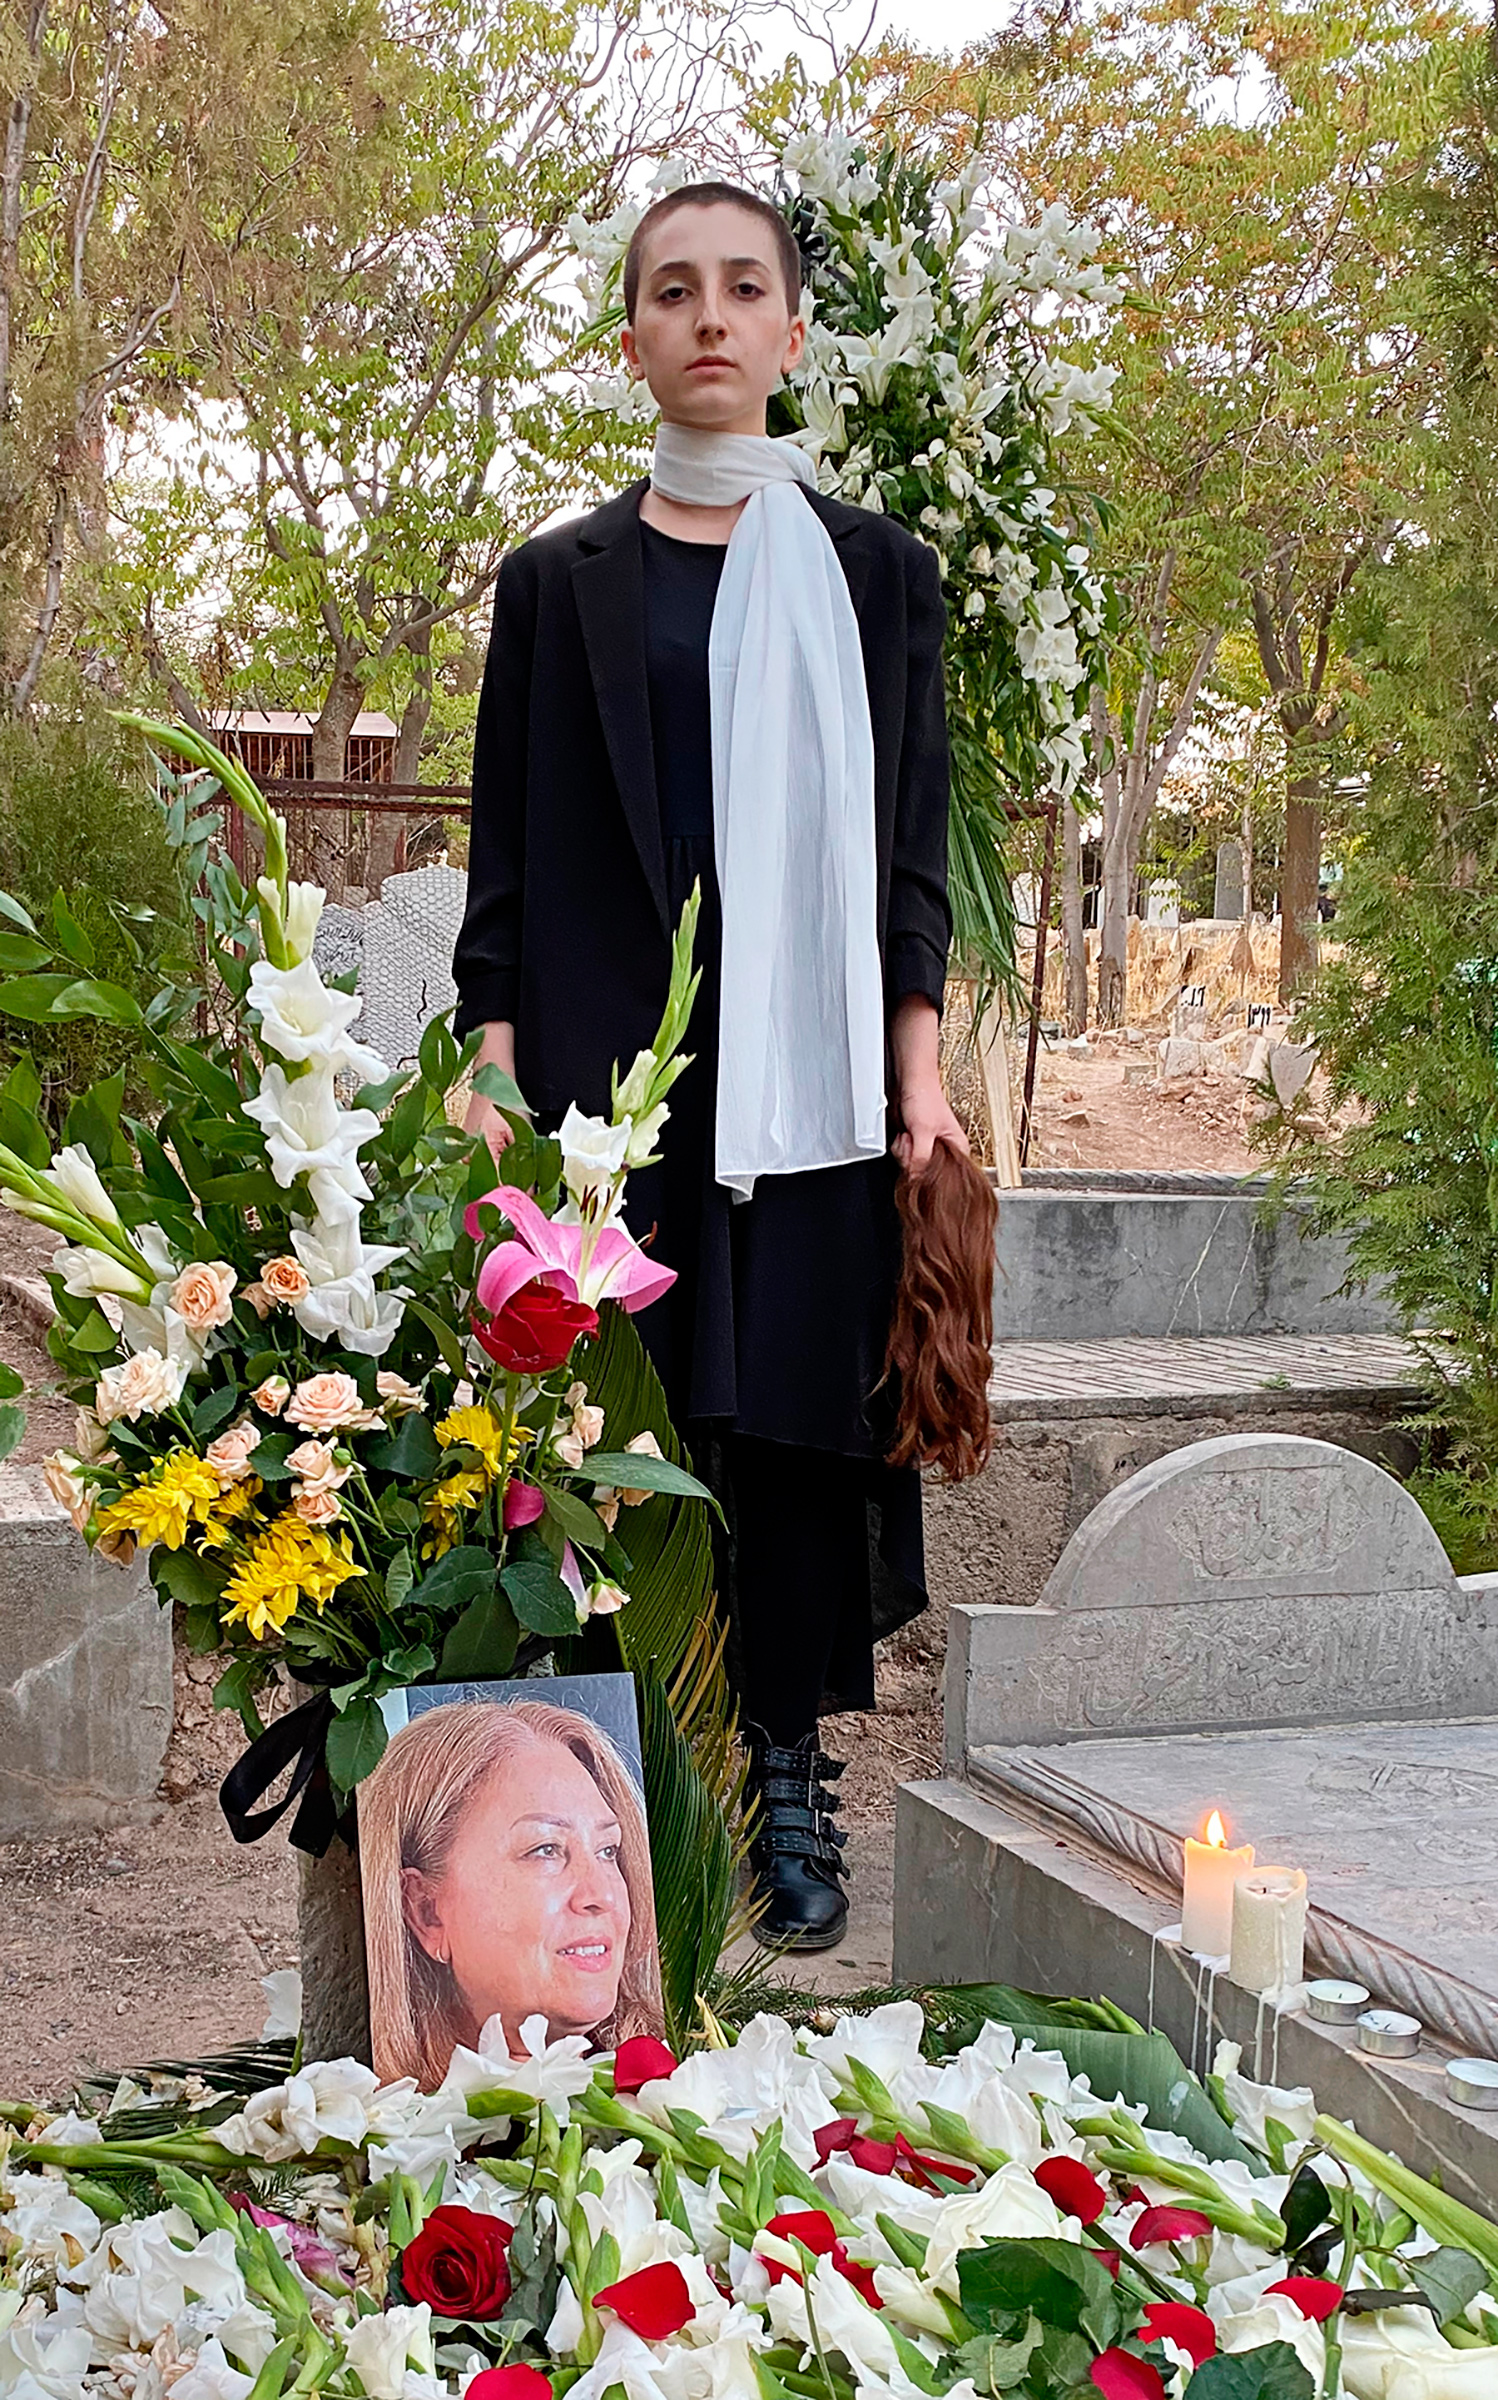 Roya Piraei next to her mother's grave. (Courtesy Roya Piraei)